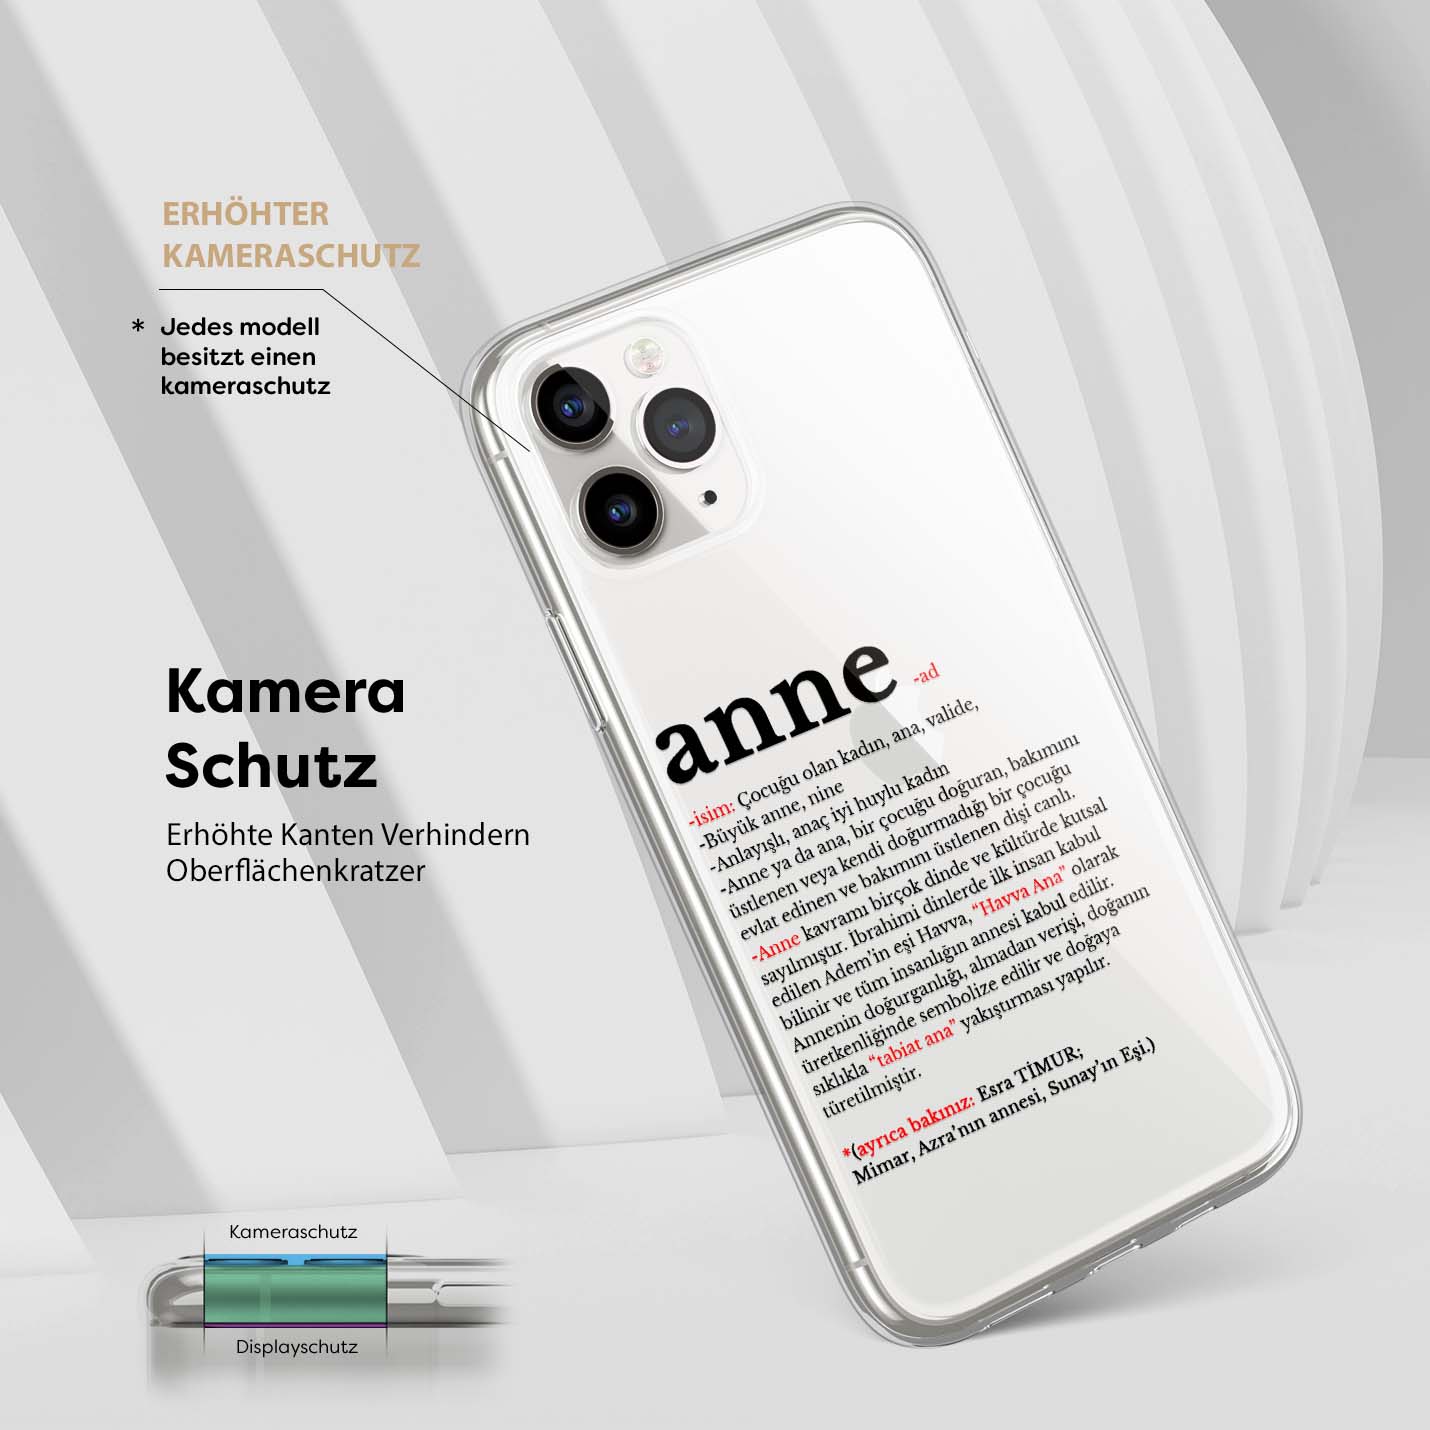 Handyhülle Anne - Definition - 1instaphone